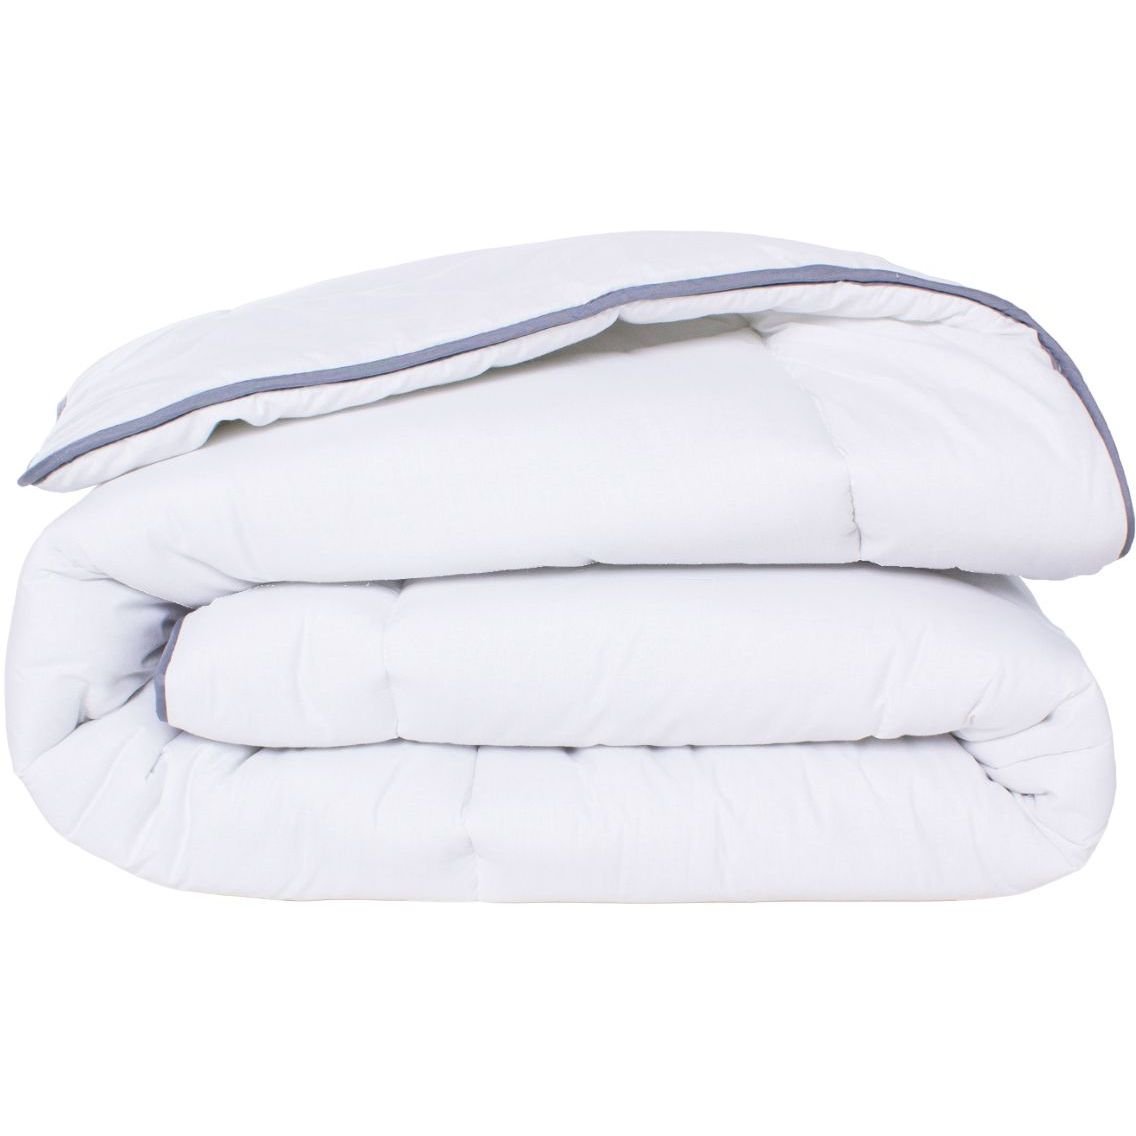 Одеяло шерстяное MirSon Royal №026, демисезонное, 155x215 см, белое - фото 1